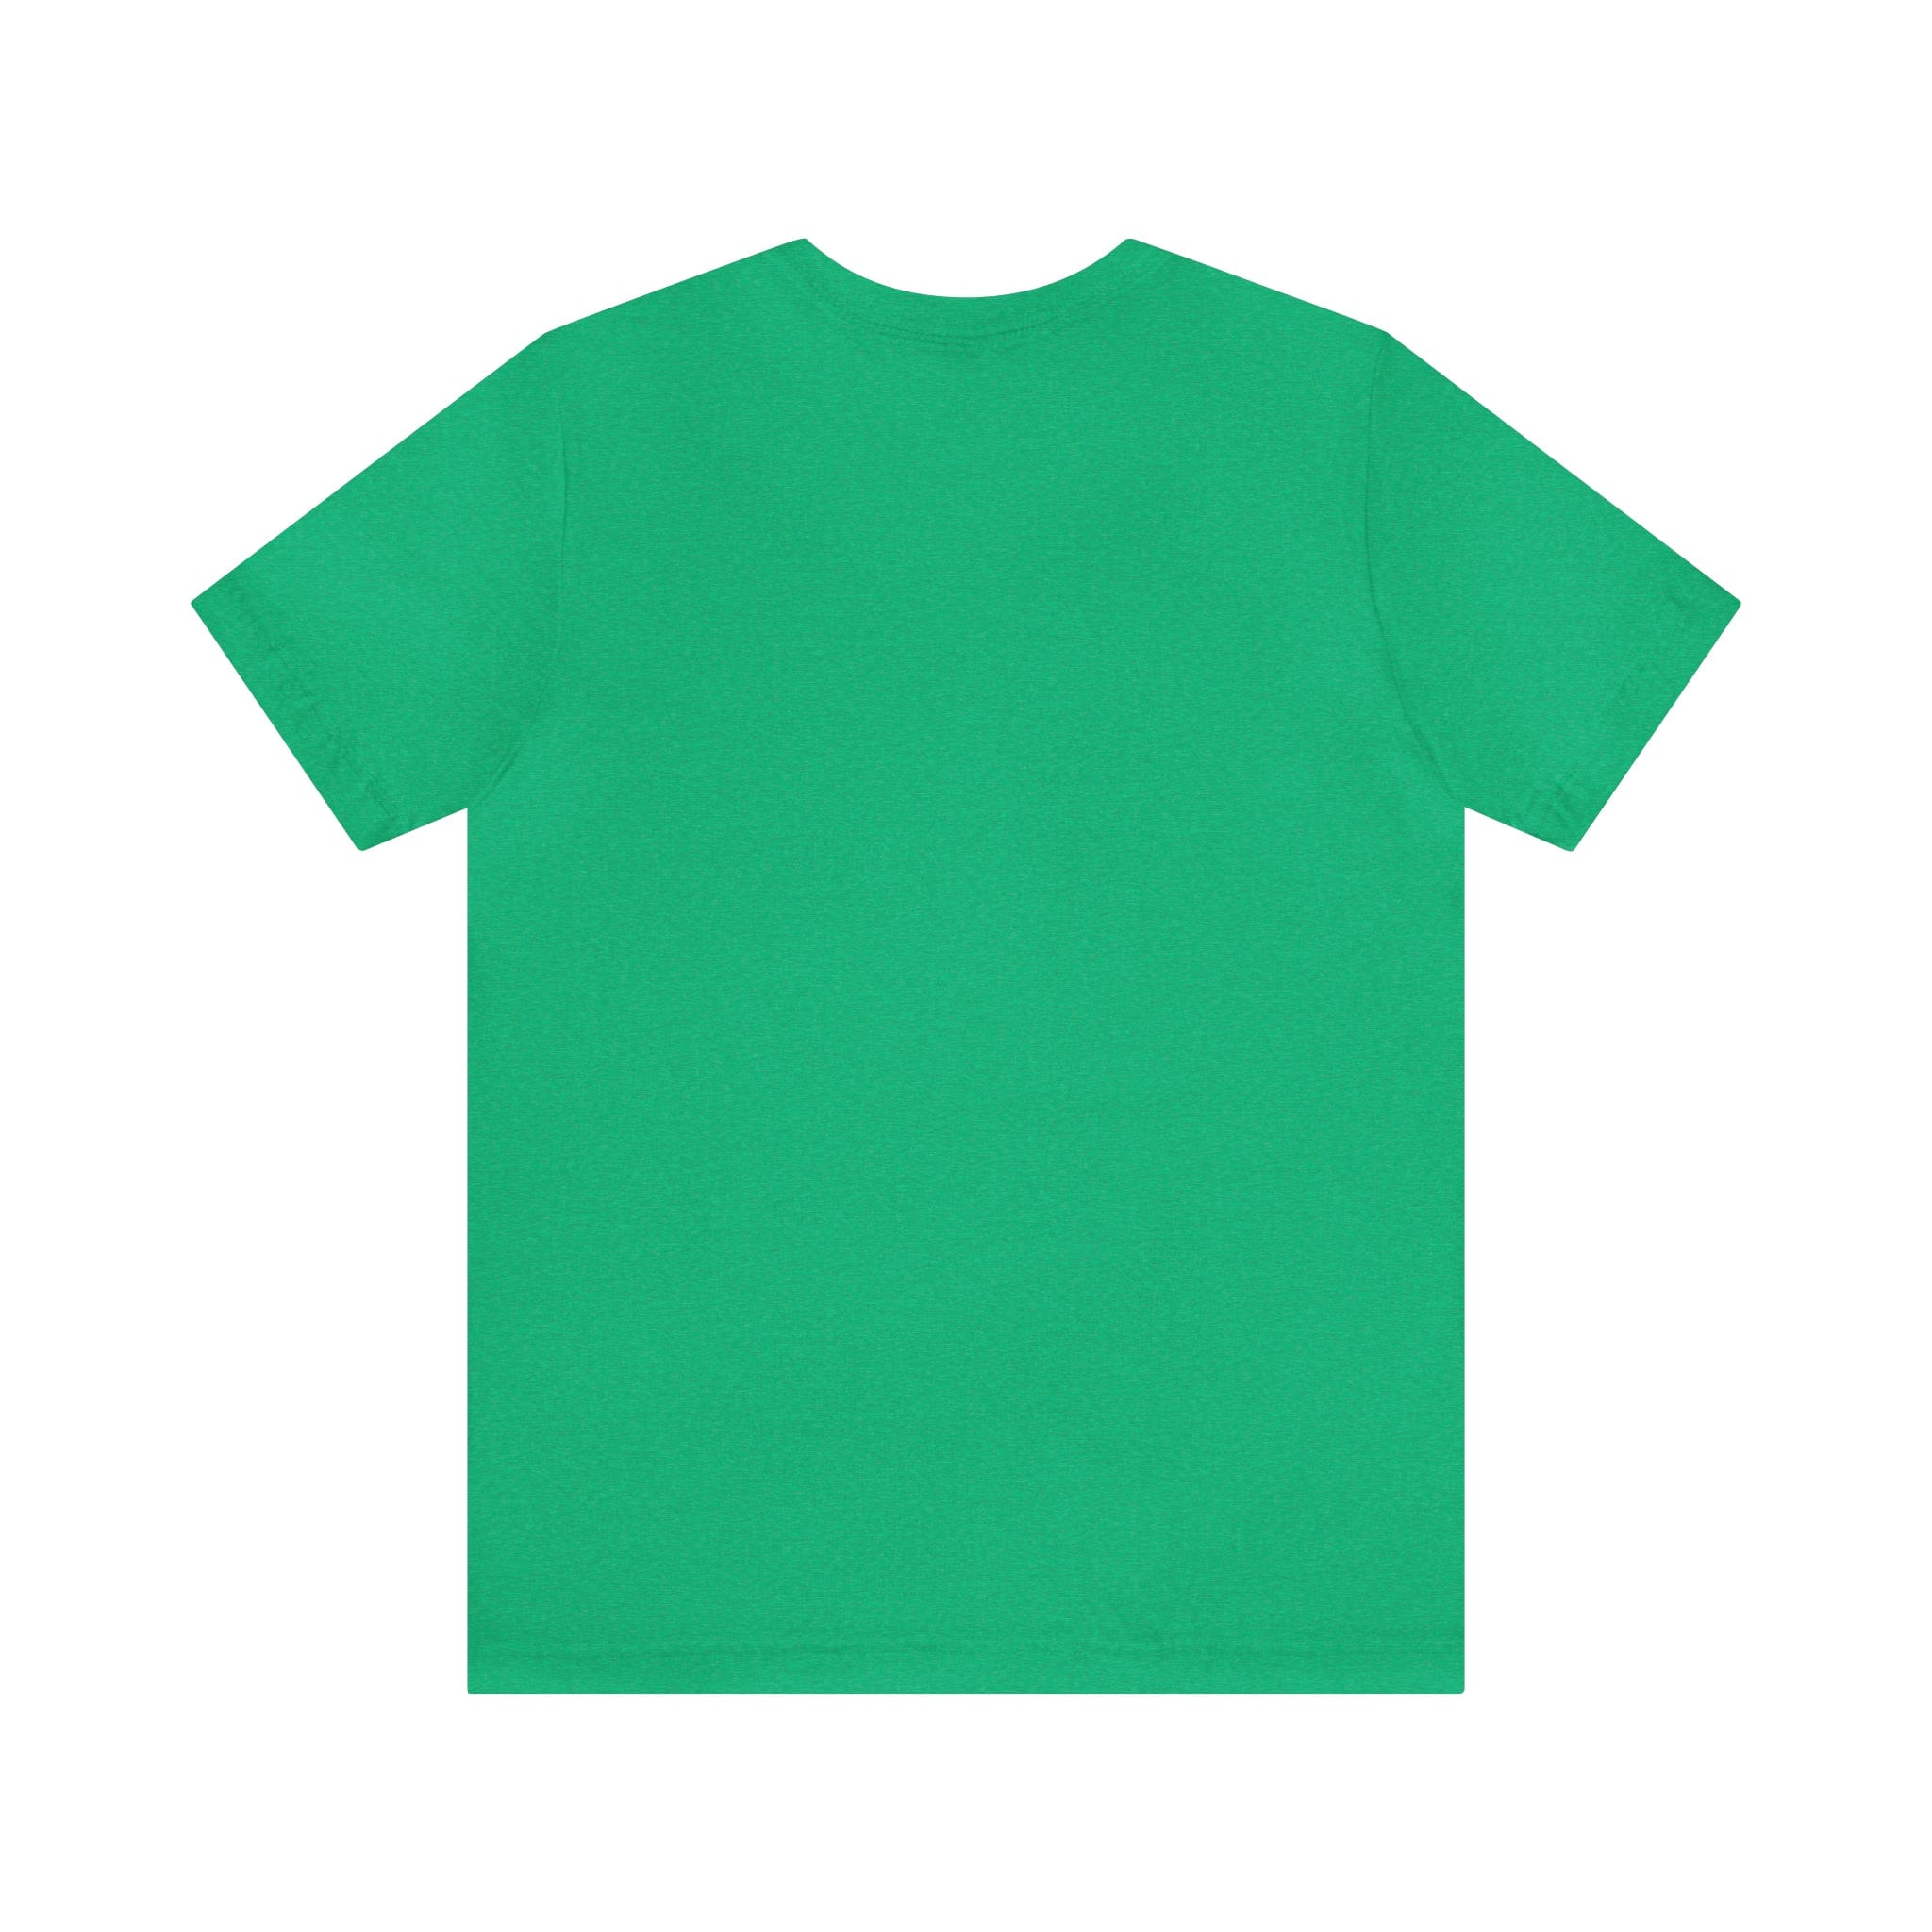 Printify T-Shirt TCB Mama Black - Jersey Short Sleeve Tee